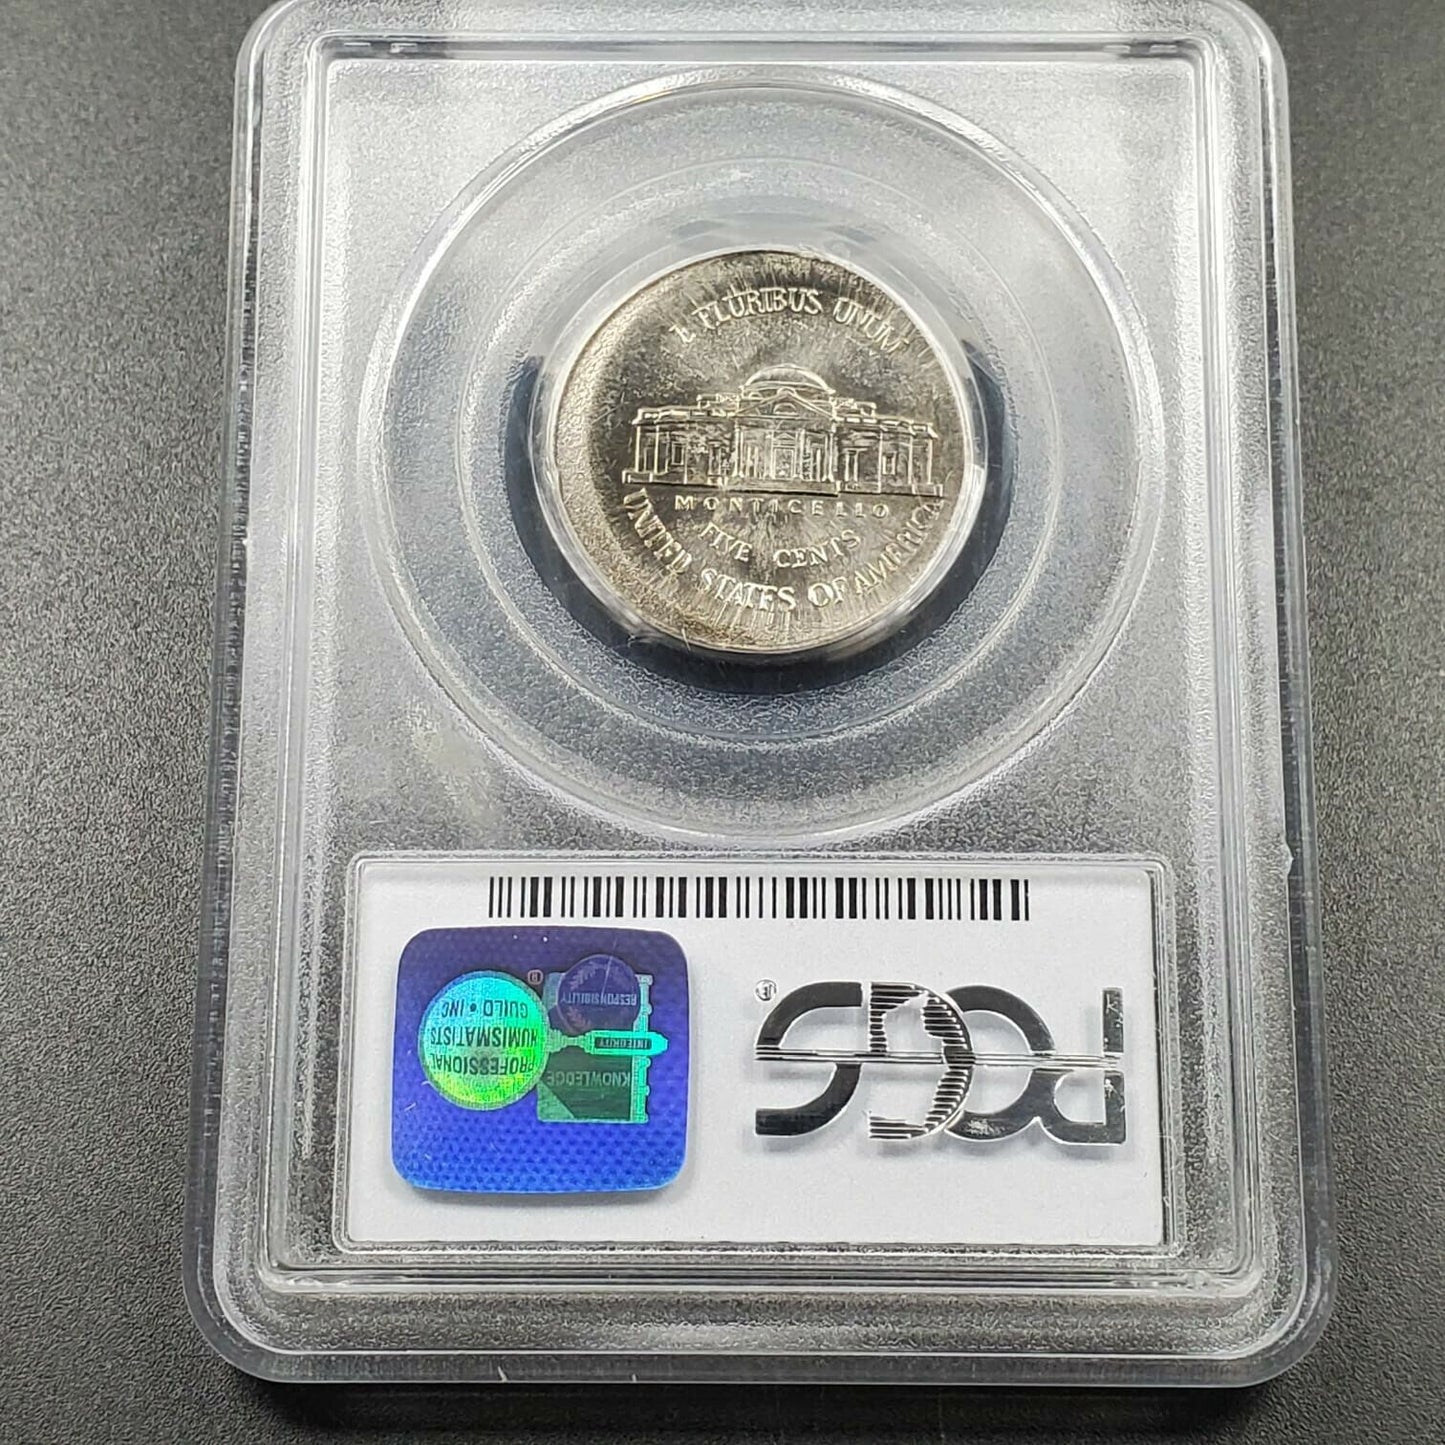 Uncentered Broadstrike ERROR 1998 P Jefferson Nickel Coin PCGS MS64 FS